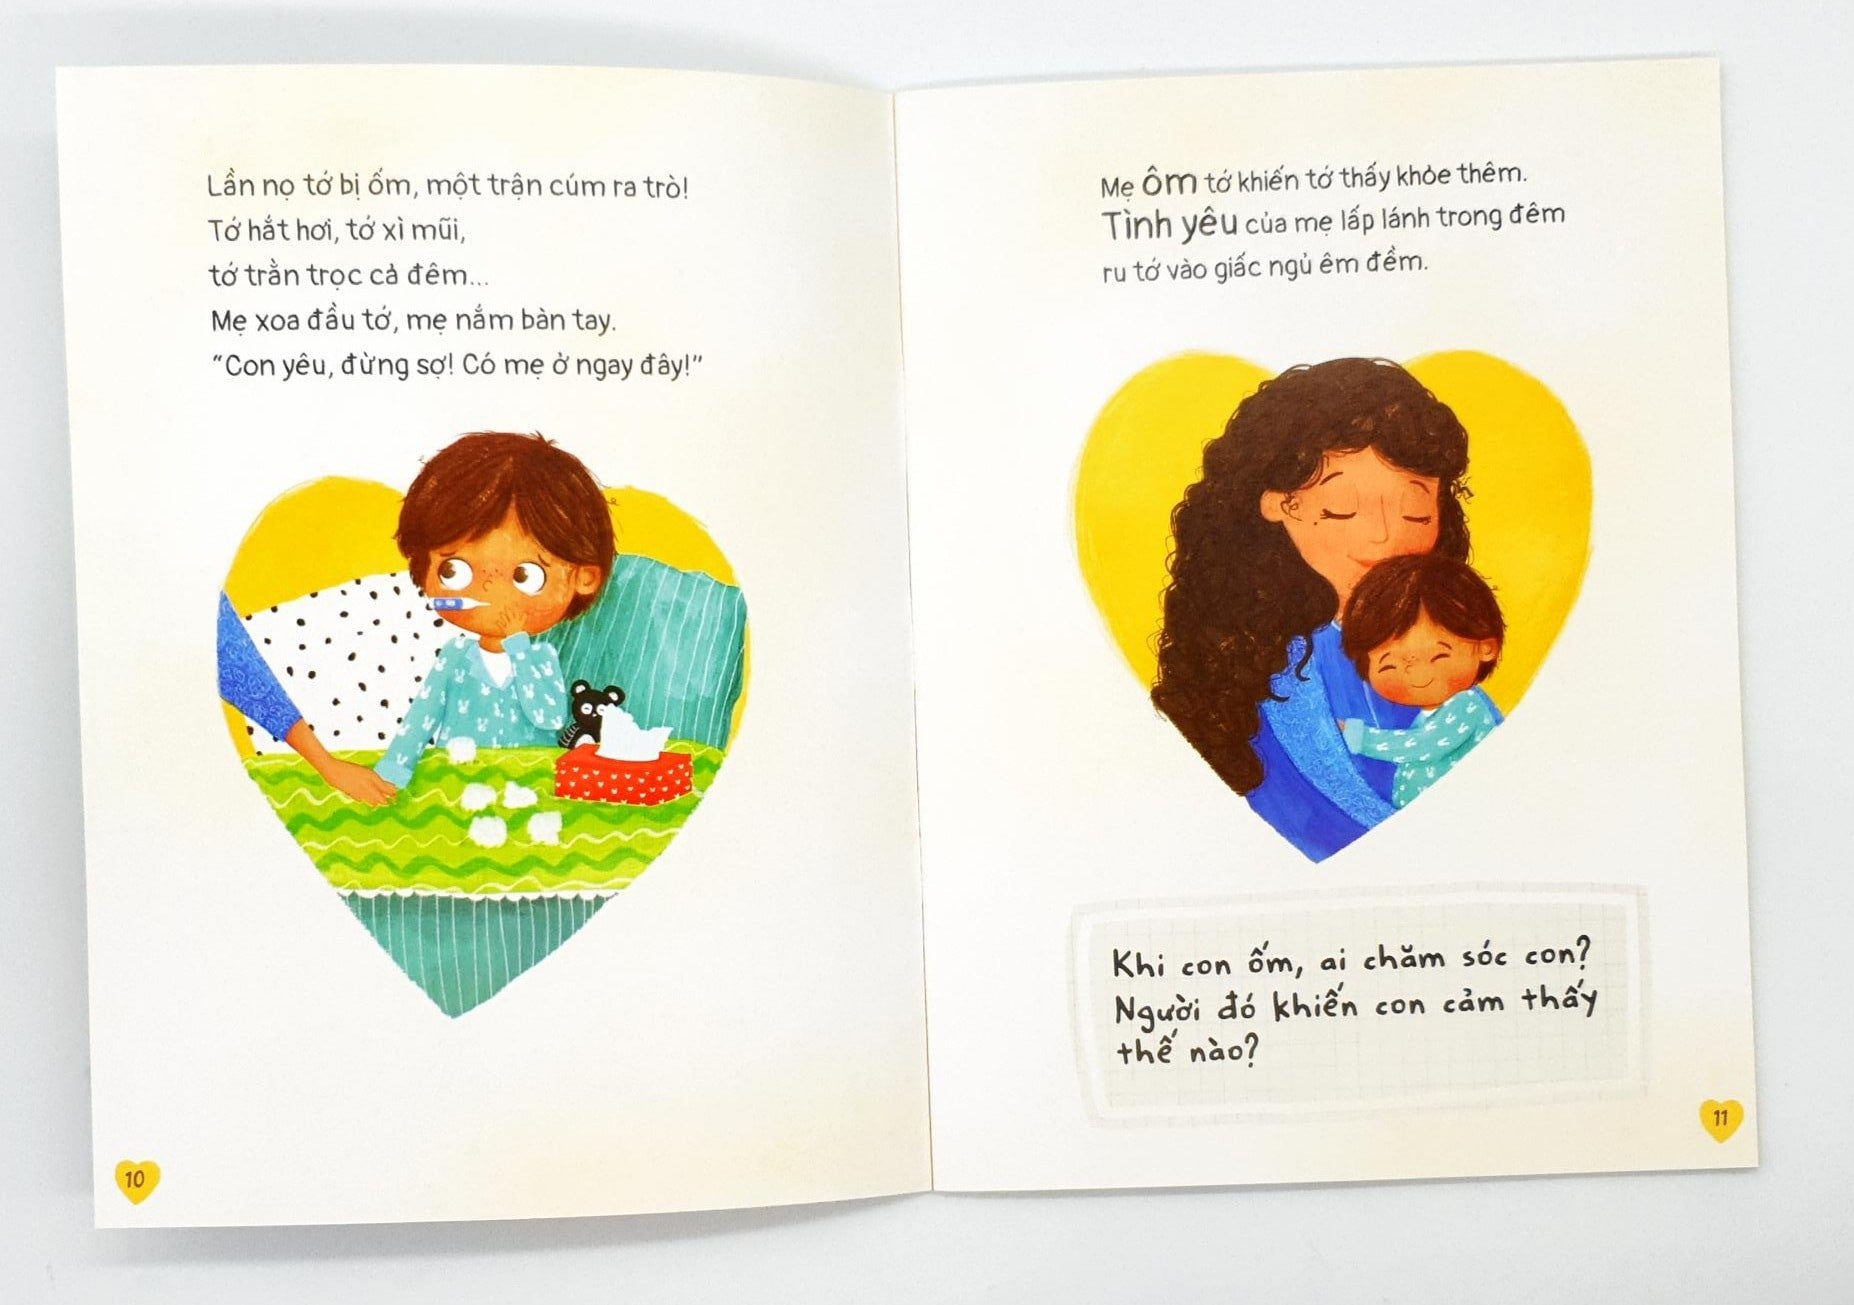 Combo 6 cuốn phát triển trí tuệ cảm xúc—Jayneen Sanders| Combo 6 books for social emotional development in children